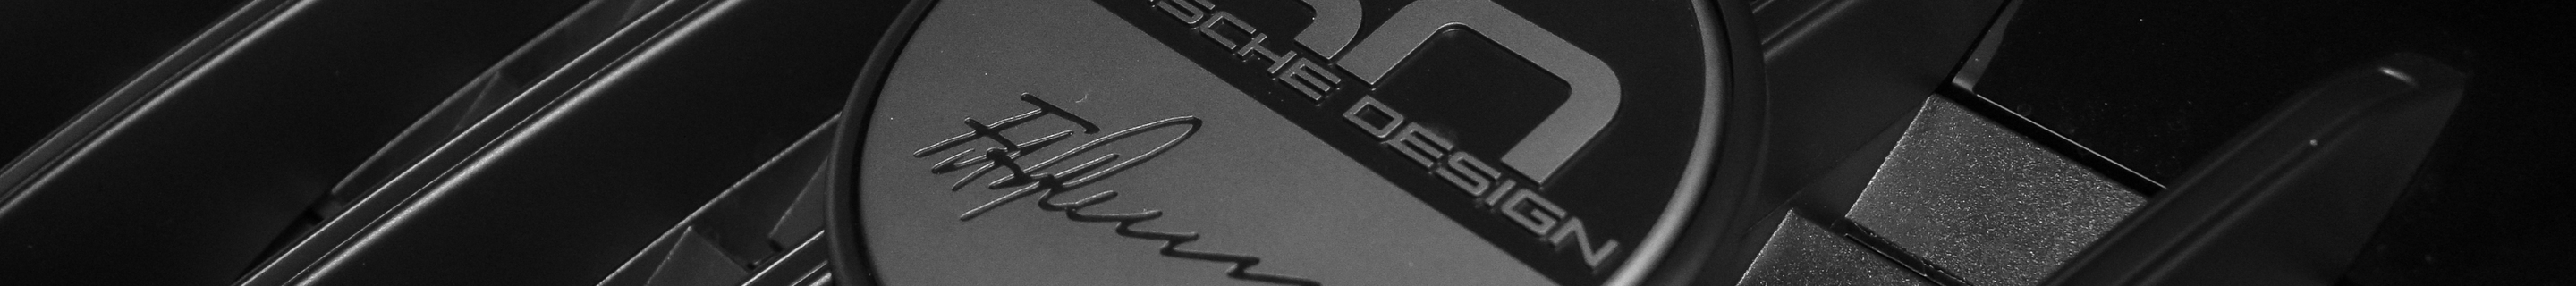 Porsche 992 Targa 4 GTS Edition 50 Years Porsche Design